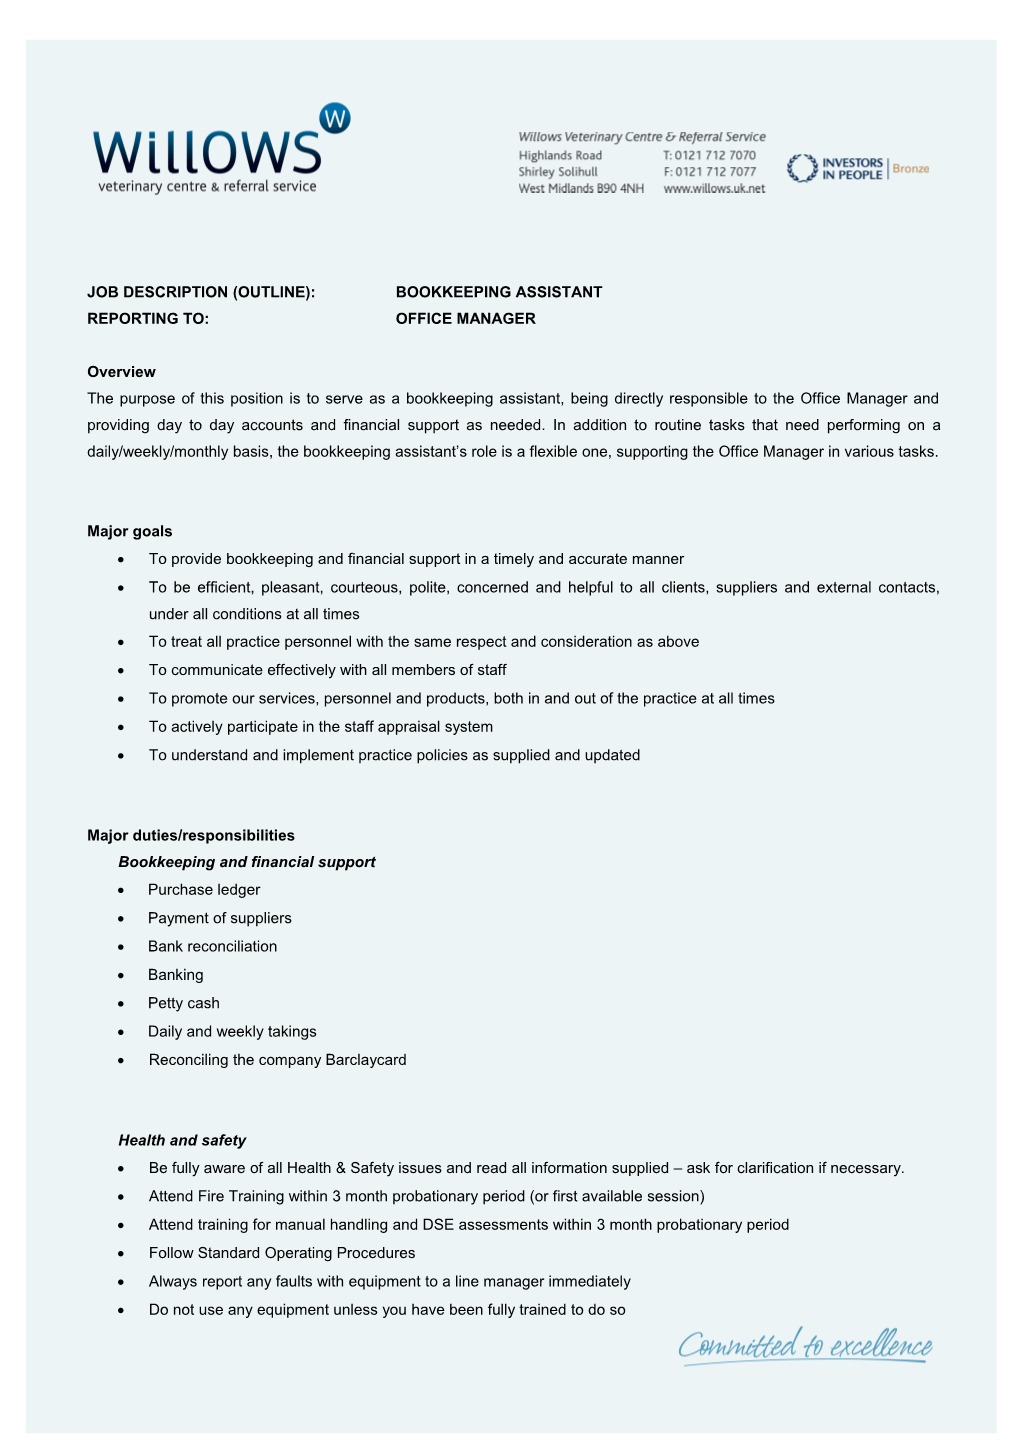 Job Description (Outline):Bookkeeping Assistant